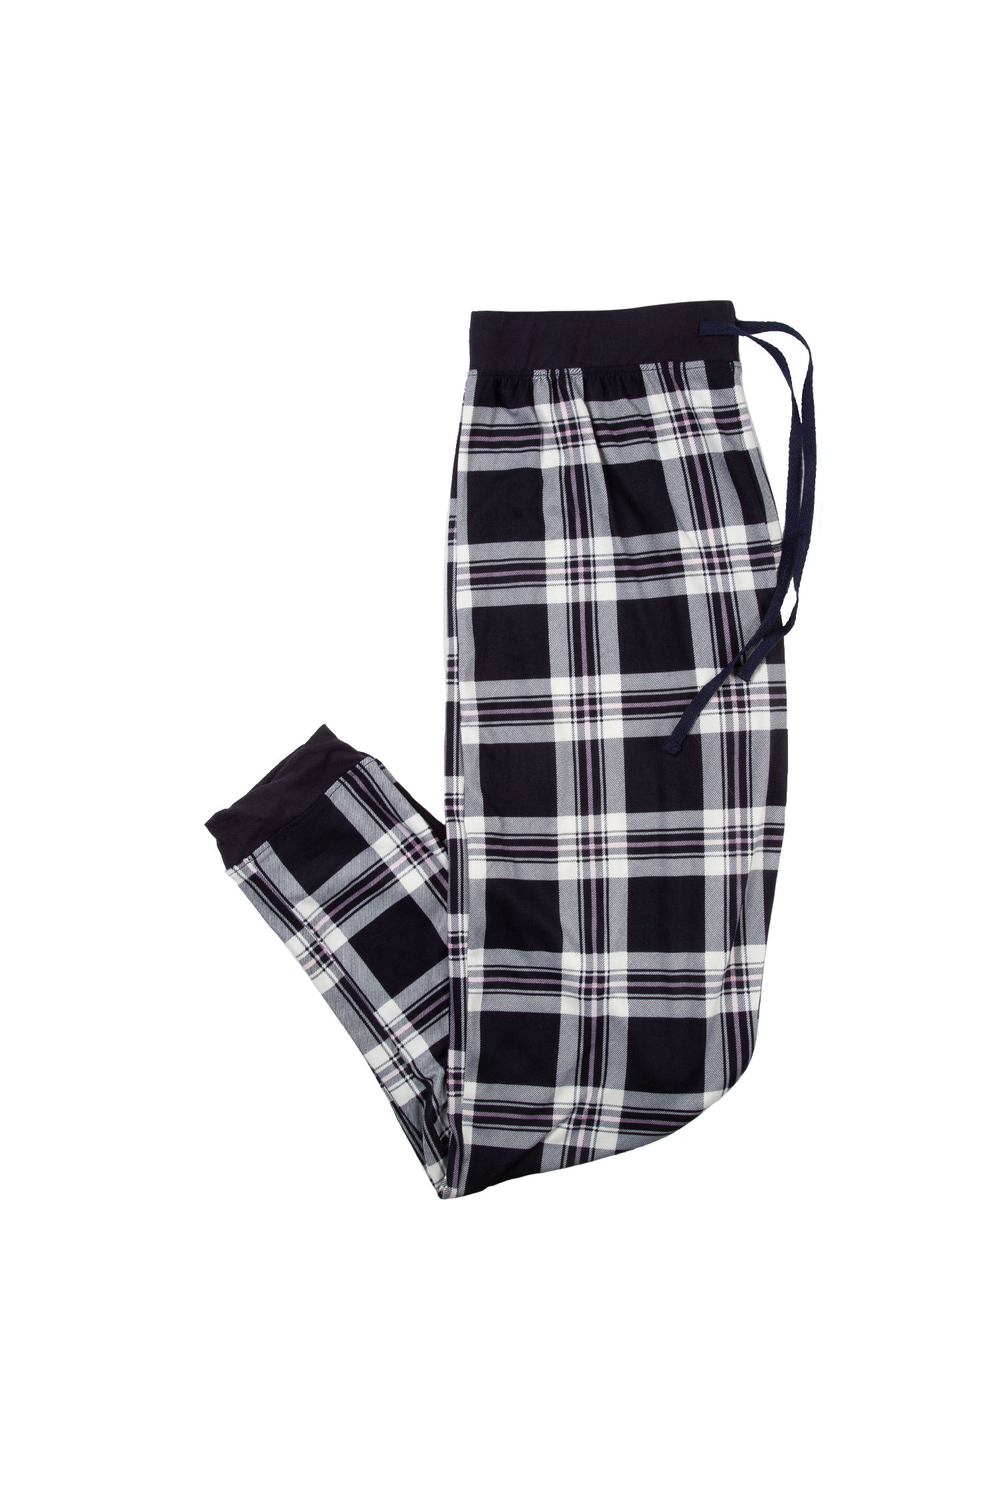 Stretch knit jogger style pajama pants, navy plaid, extra large (XL)